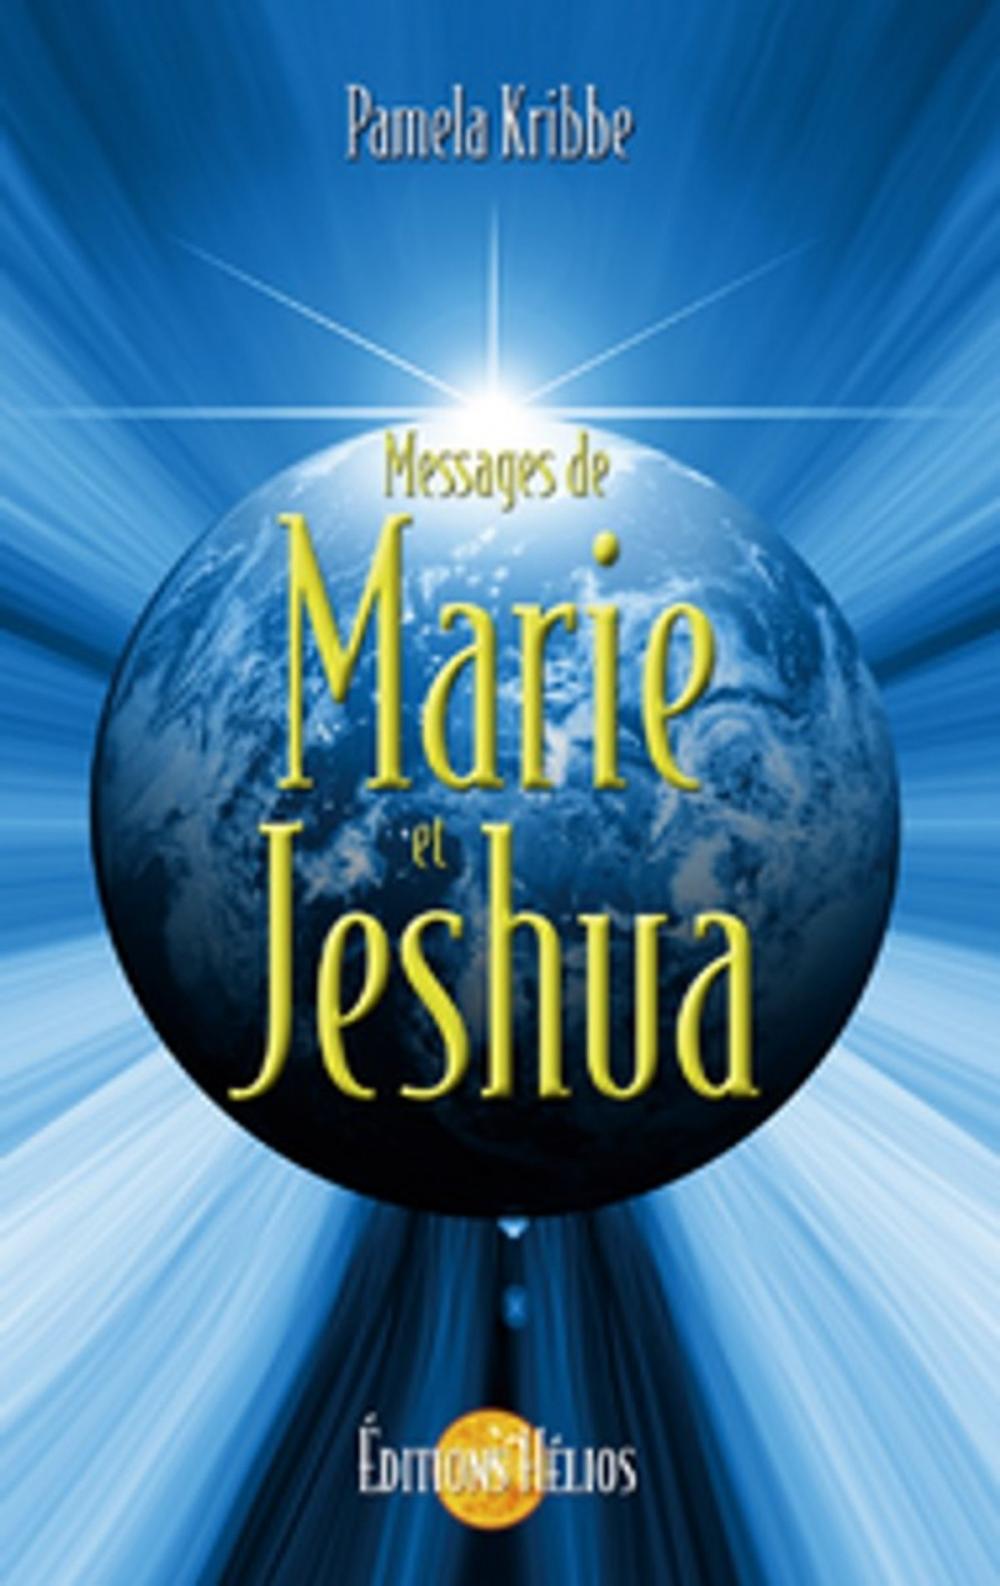 Big bigCover of Messages de Marie et Jeshua